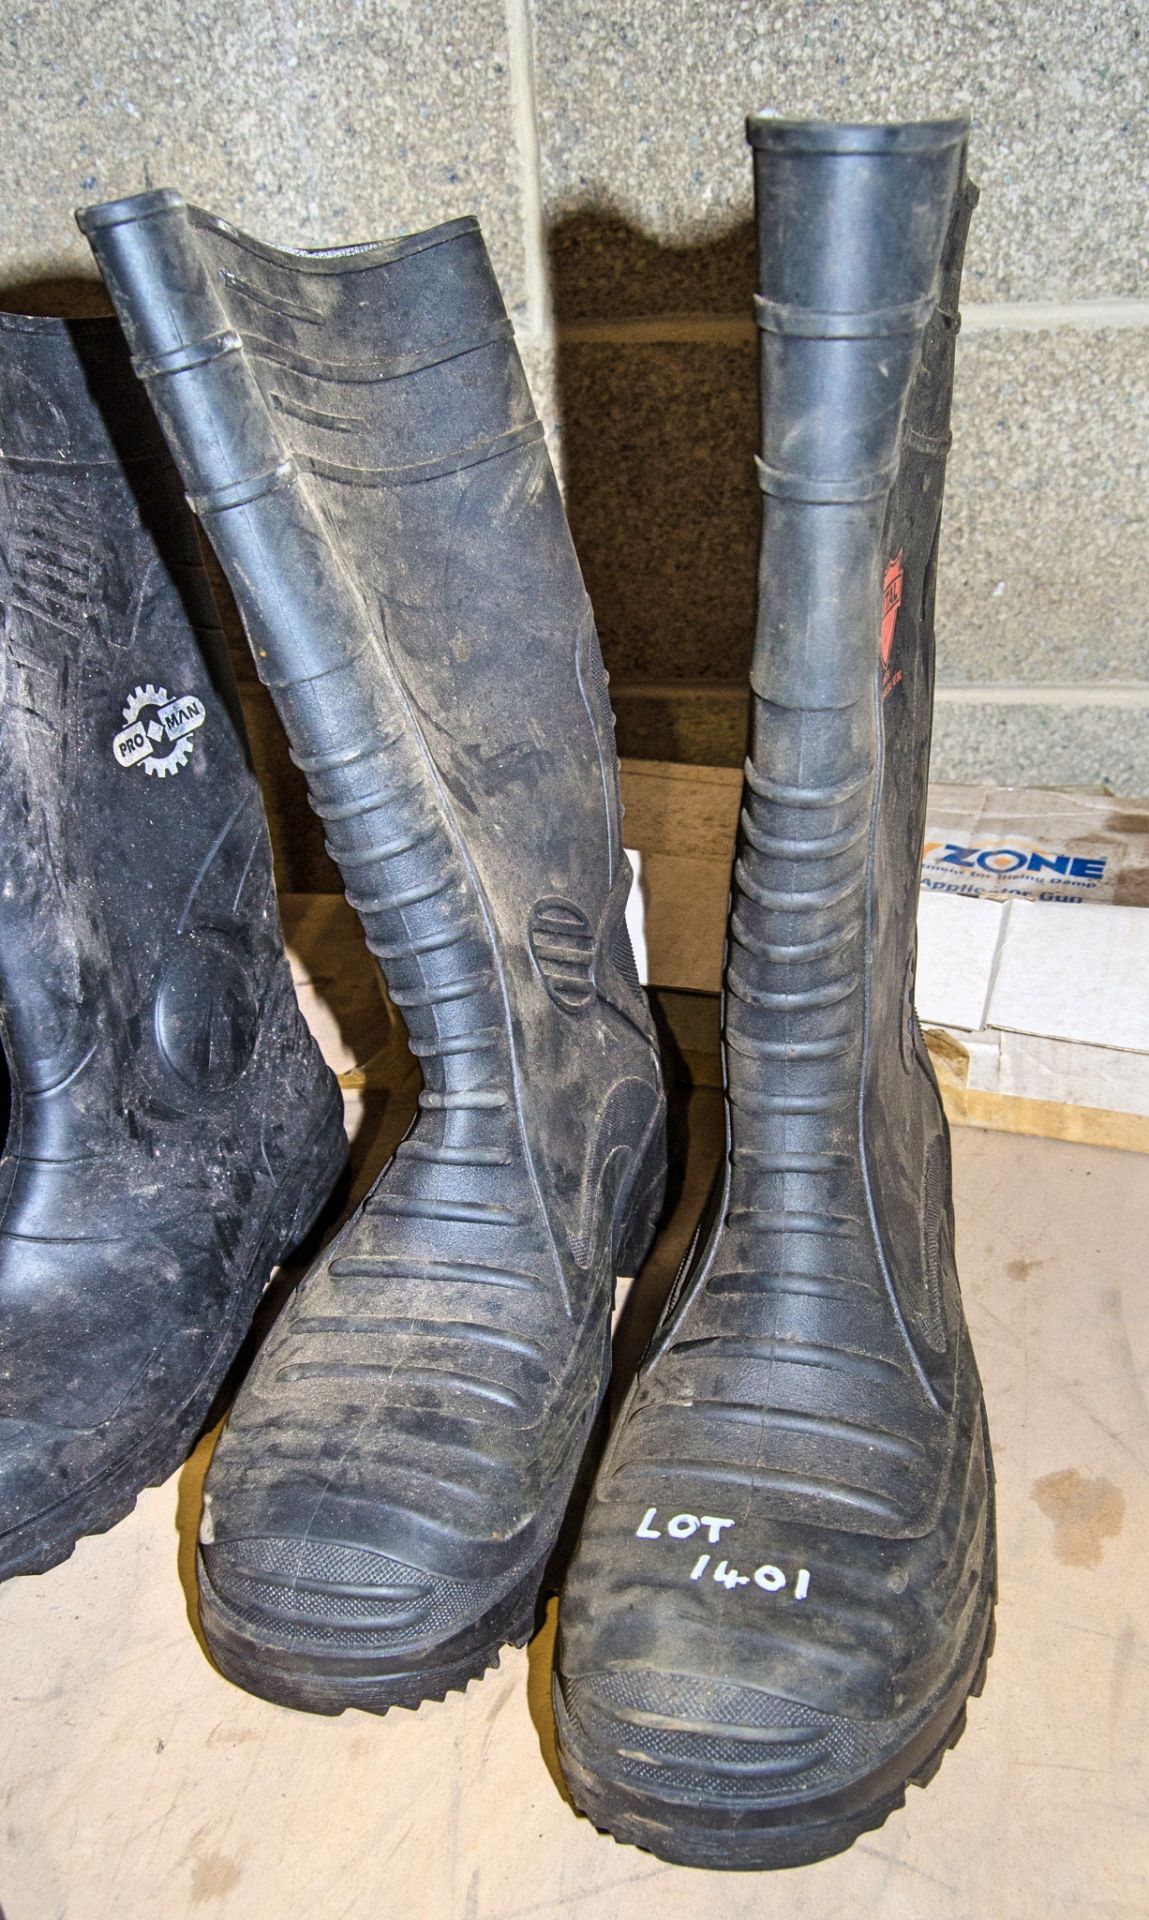 Pair of size 11 Vital steel toe cap wellington boots